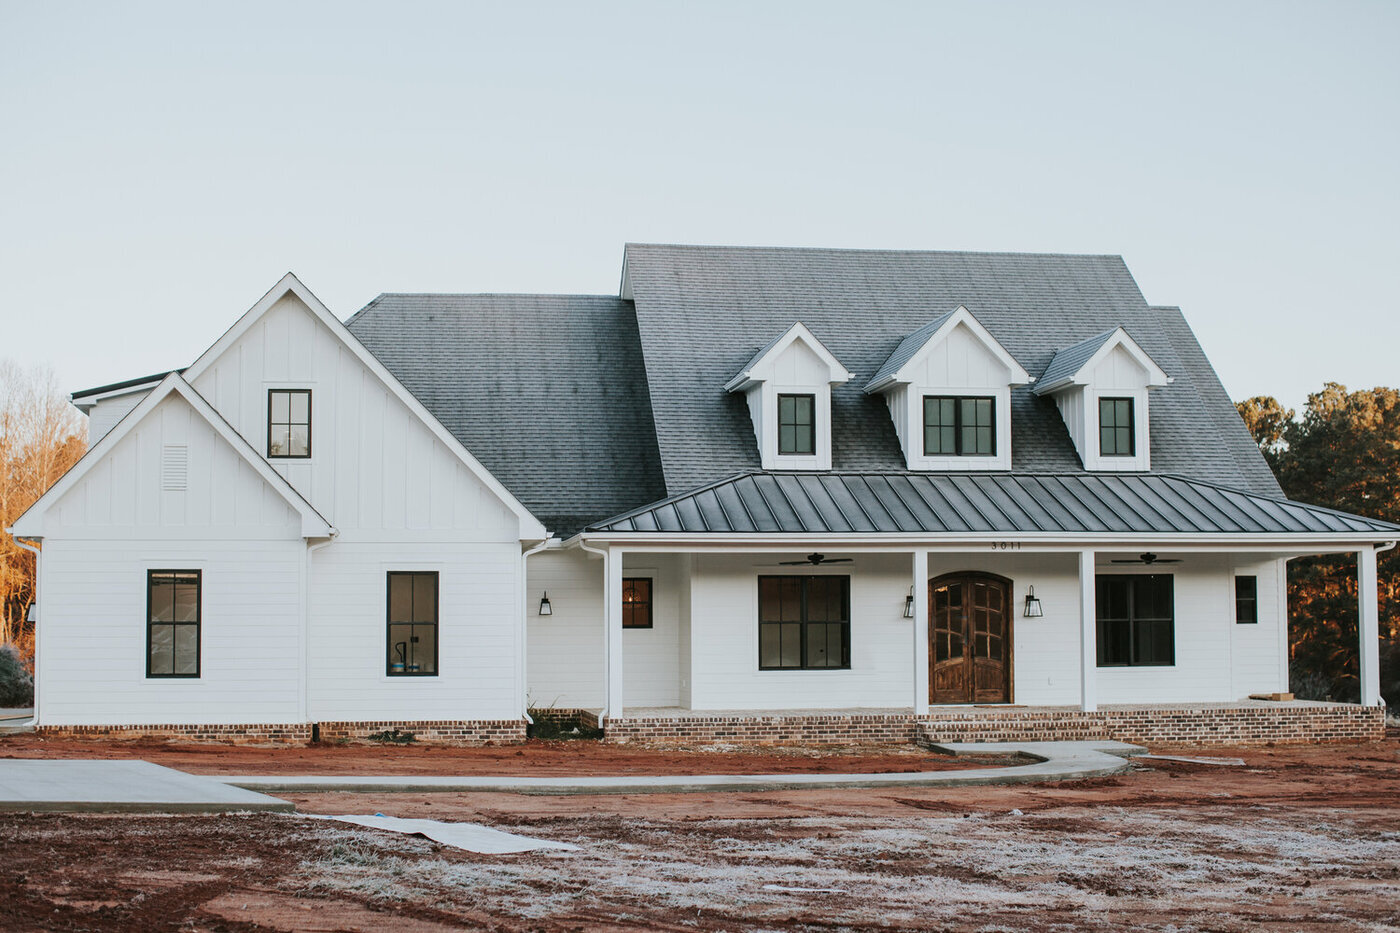 Boerner Construction is a leading custom home builder